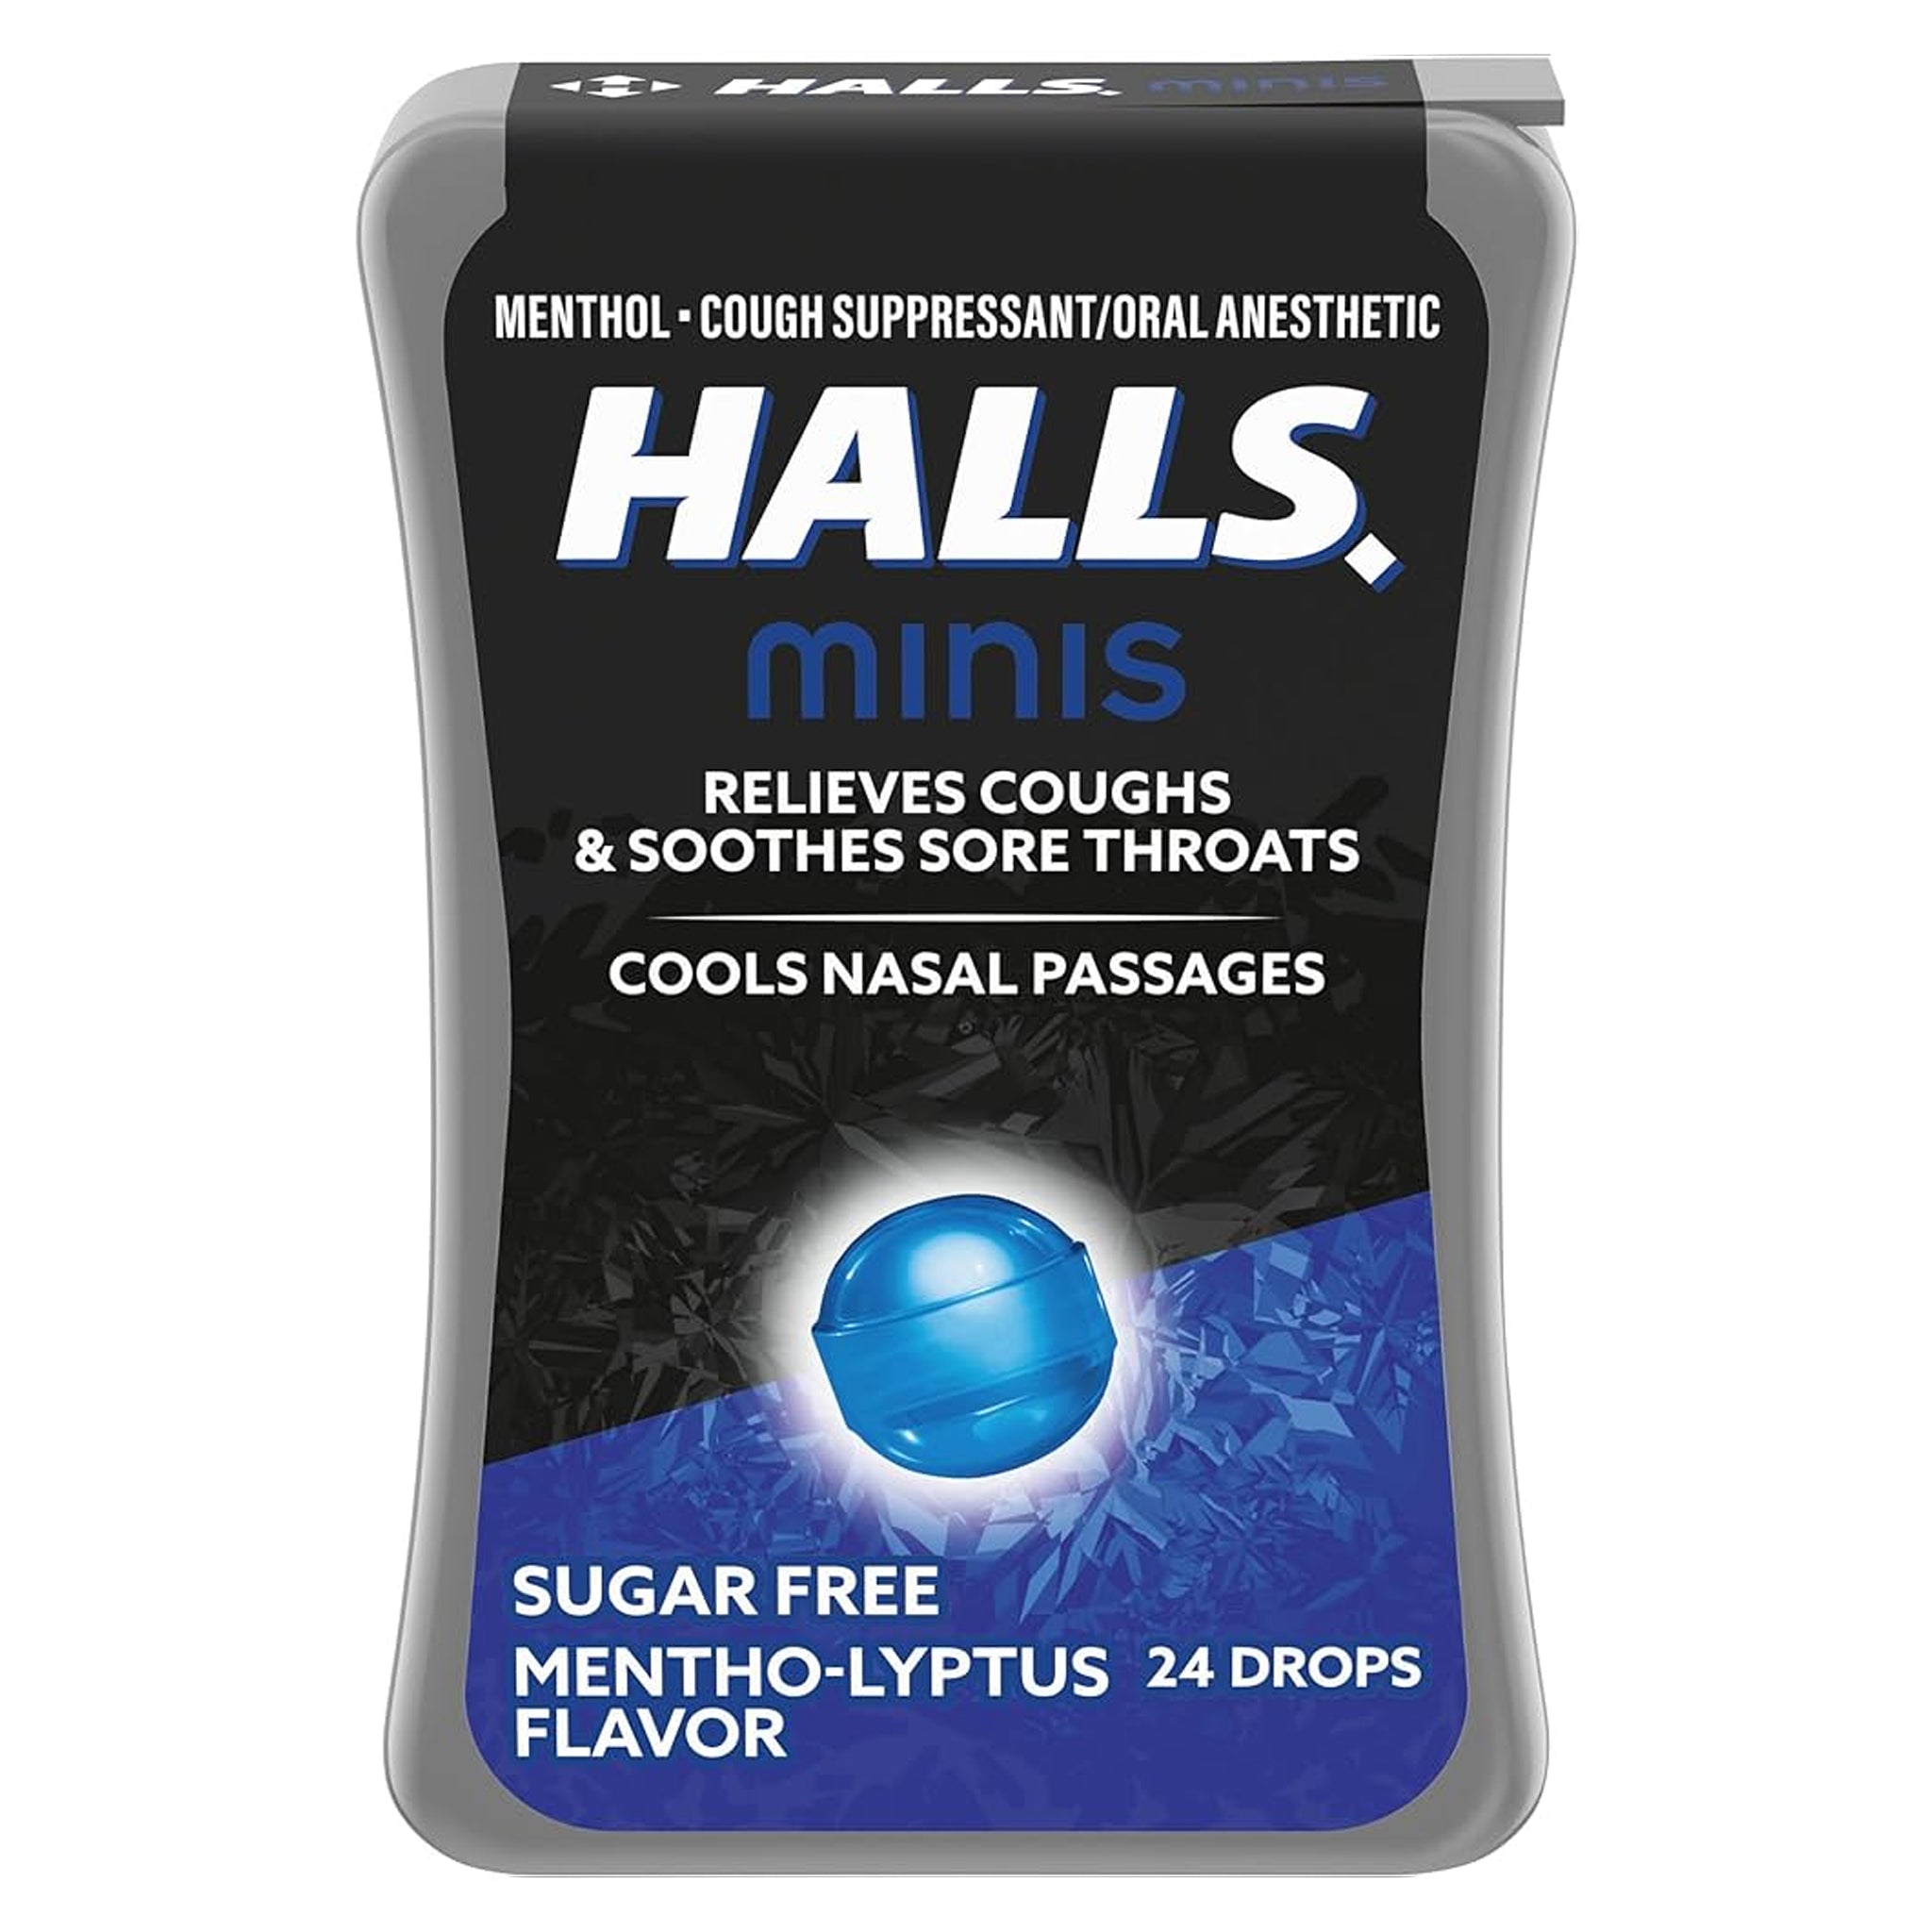 HALLS Minis Mentho-Lyptus האלס סוכריות לגרון בטעם מנטול אקליפטוס ללא סוכר